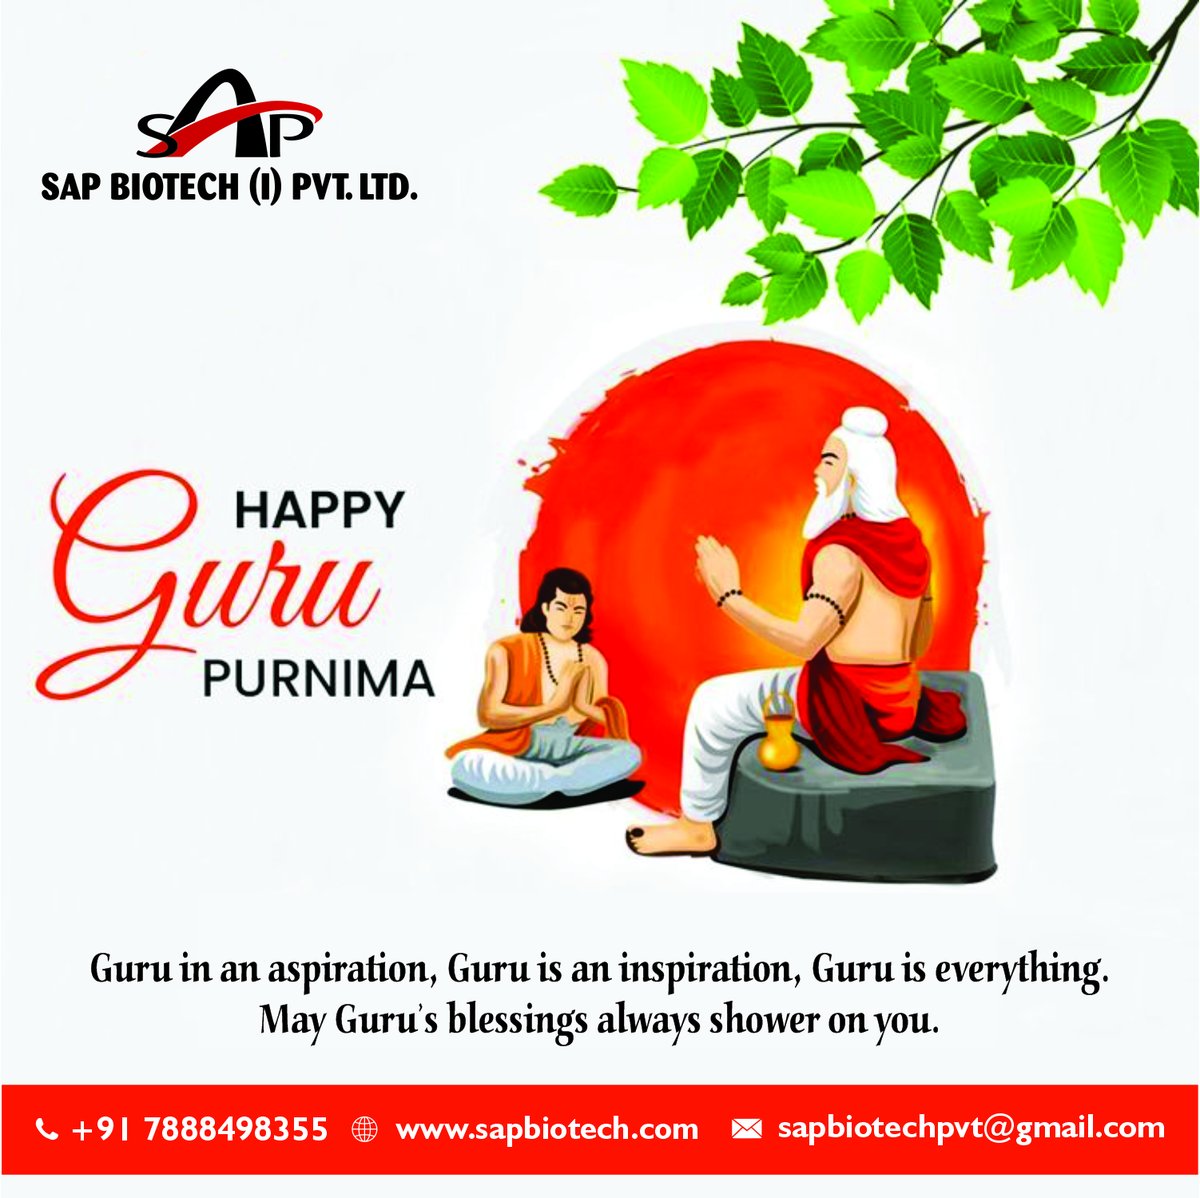 On this auspicious day, I pay tribute to my gurus and express deep gratitude for their teachings. Happy Guru Purnima!
#sapbiotech #pcdpharmafranchise